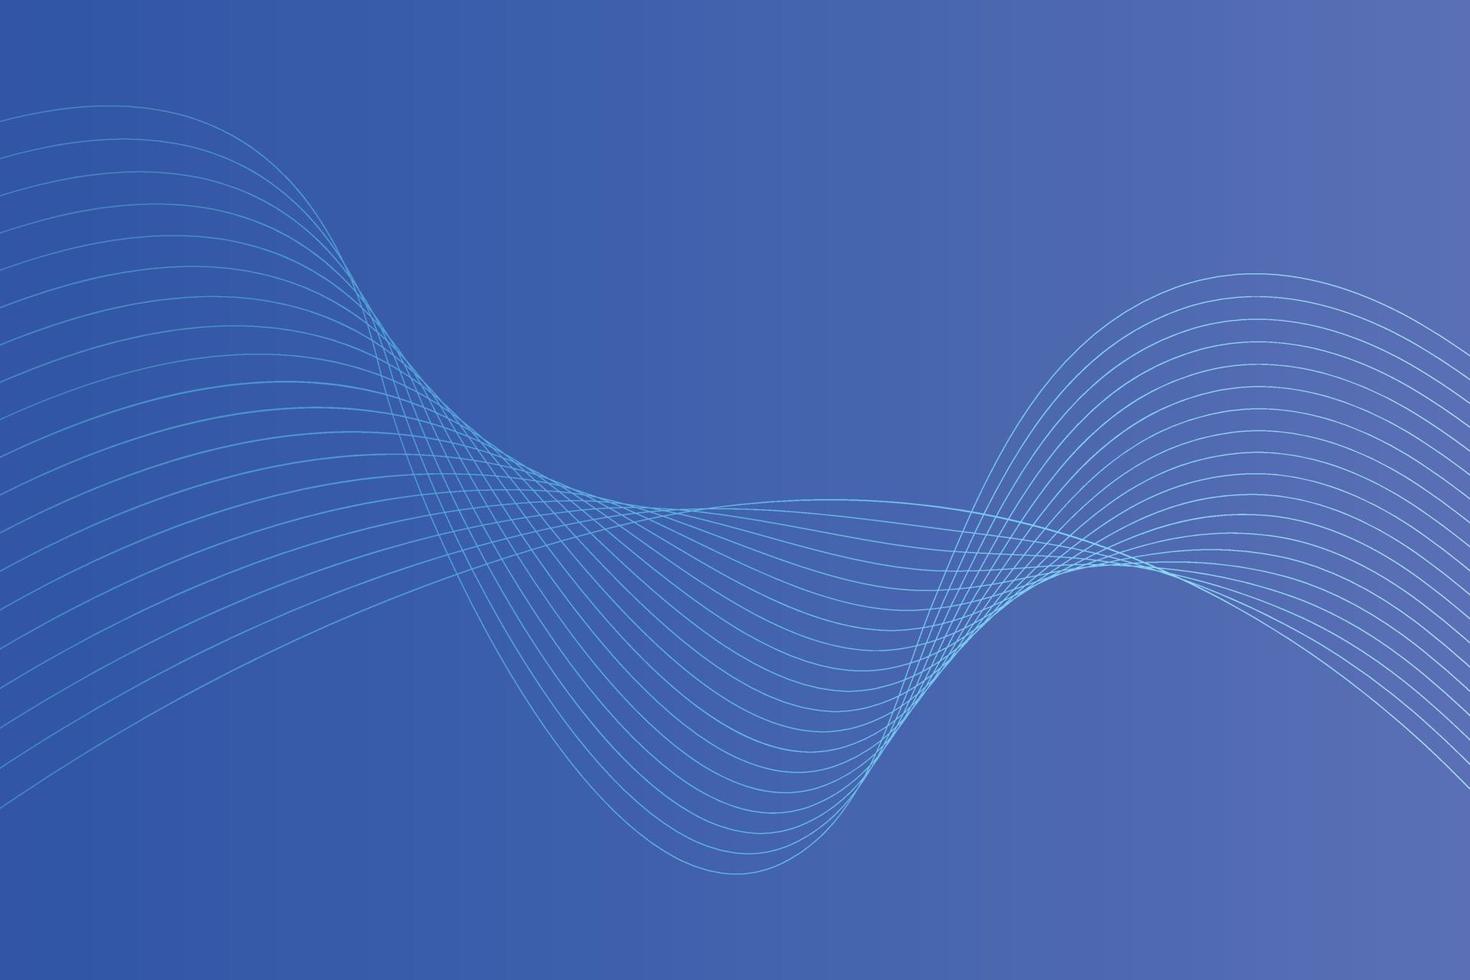 abstrato com linhas onduladas coloridas. design de fundo gradiente azul abstrato vetor